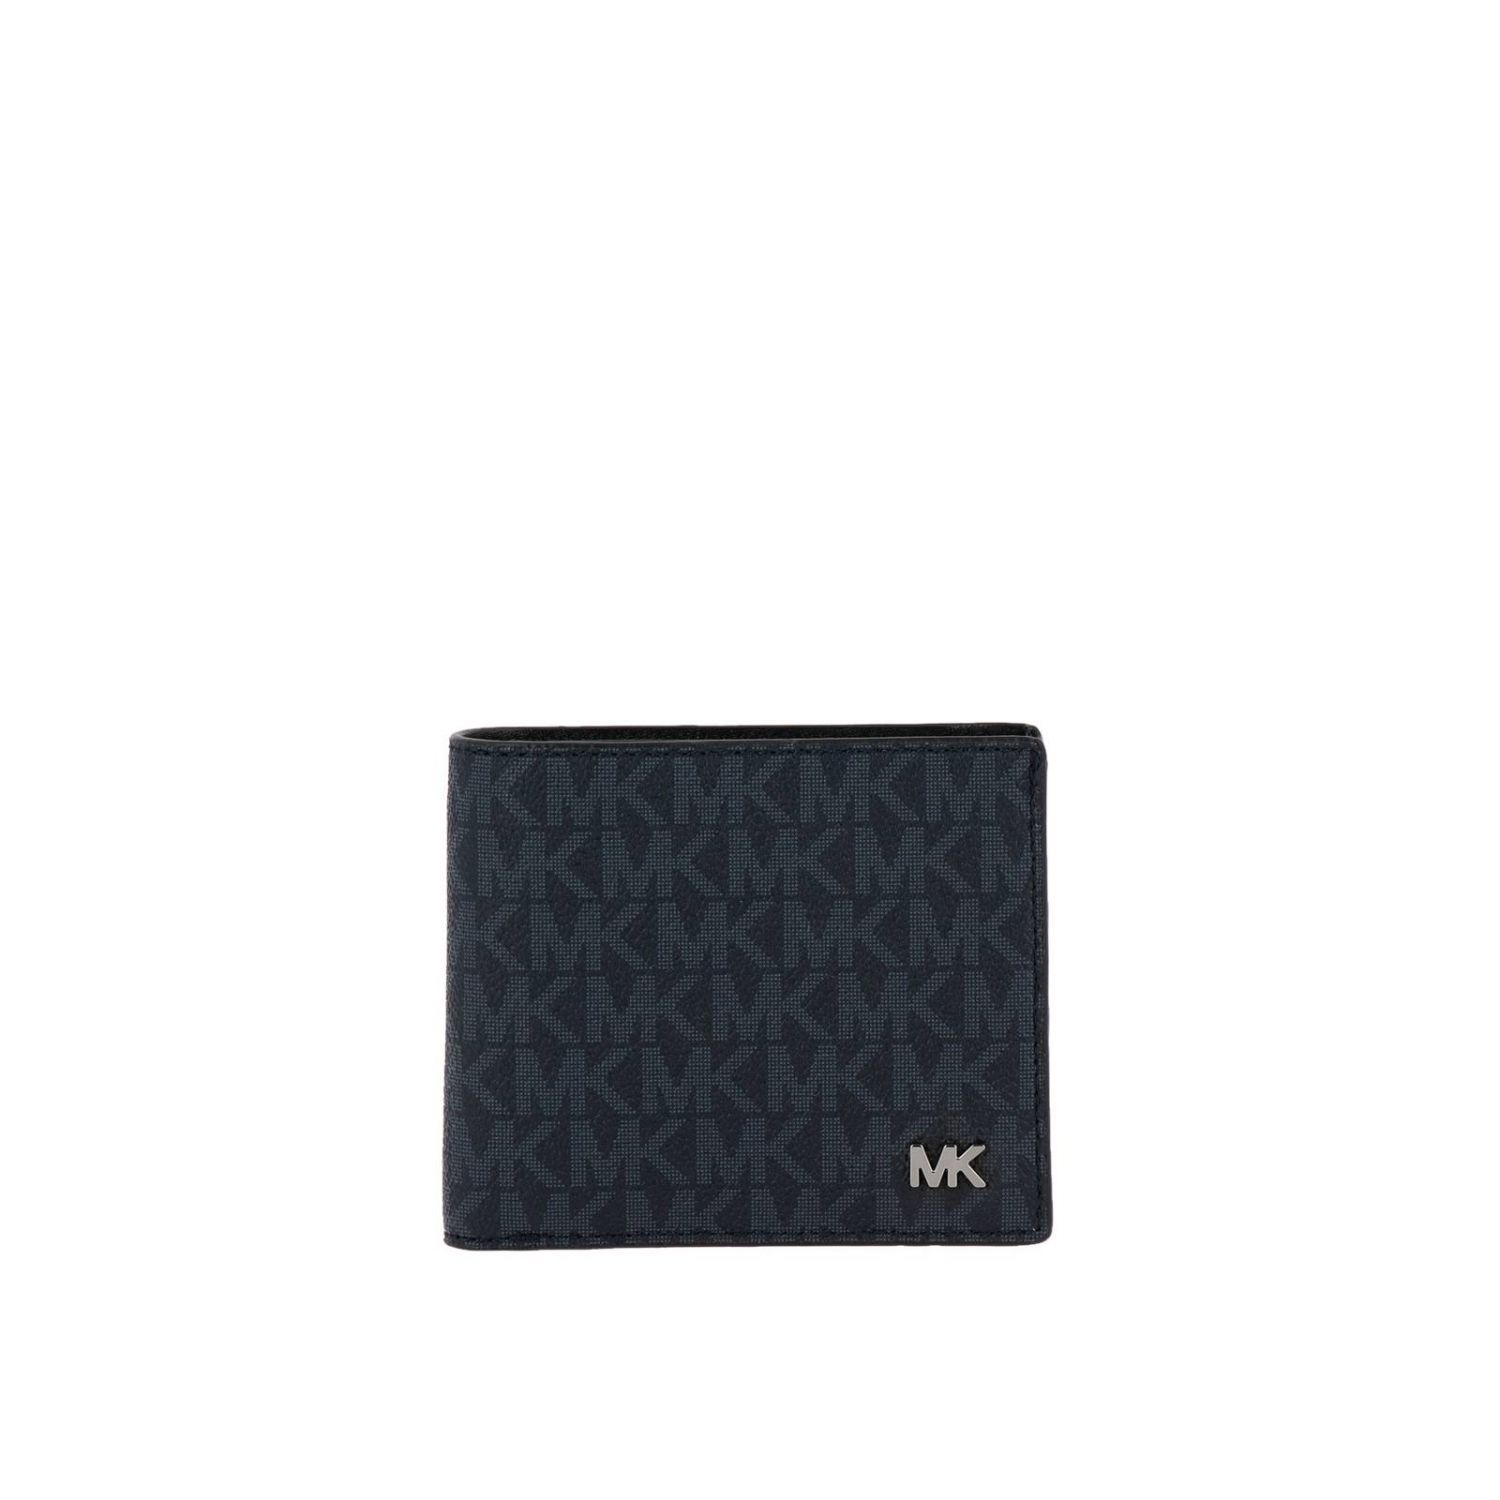 mk wallet men